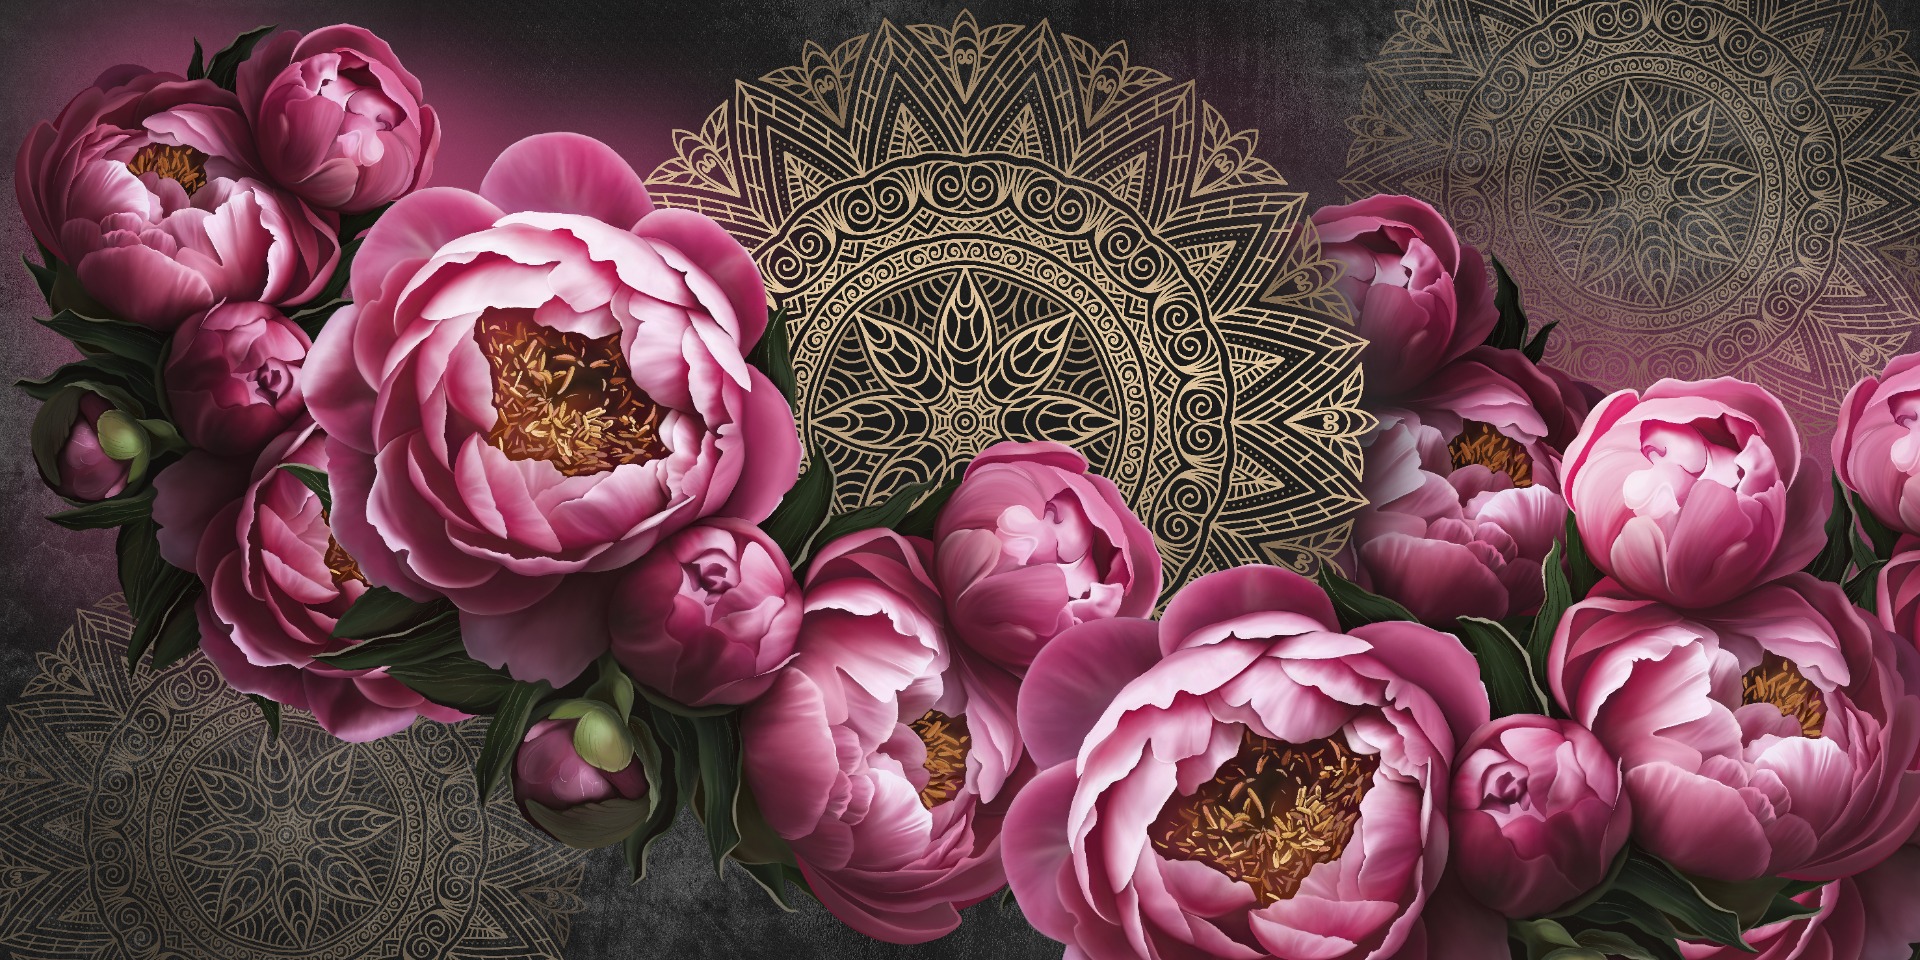 Mandala Wallpaper Images - Free Download on Freepik